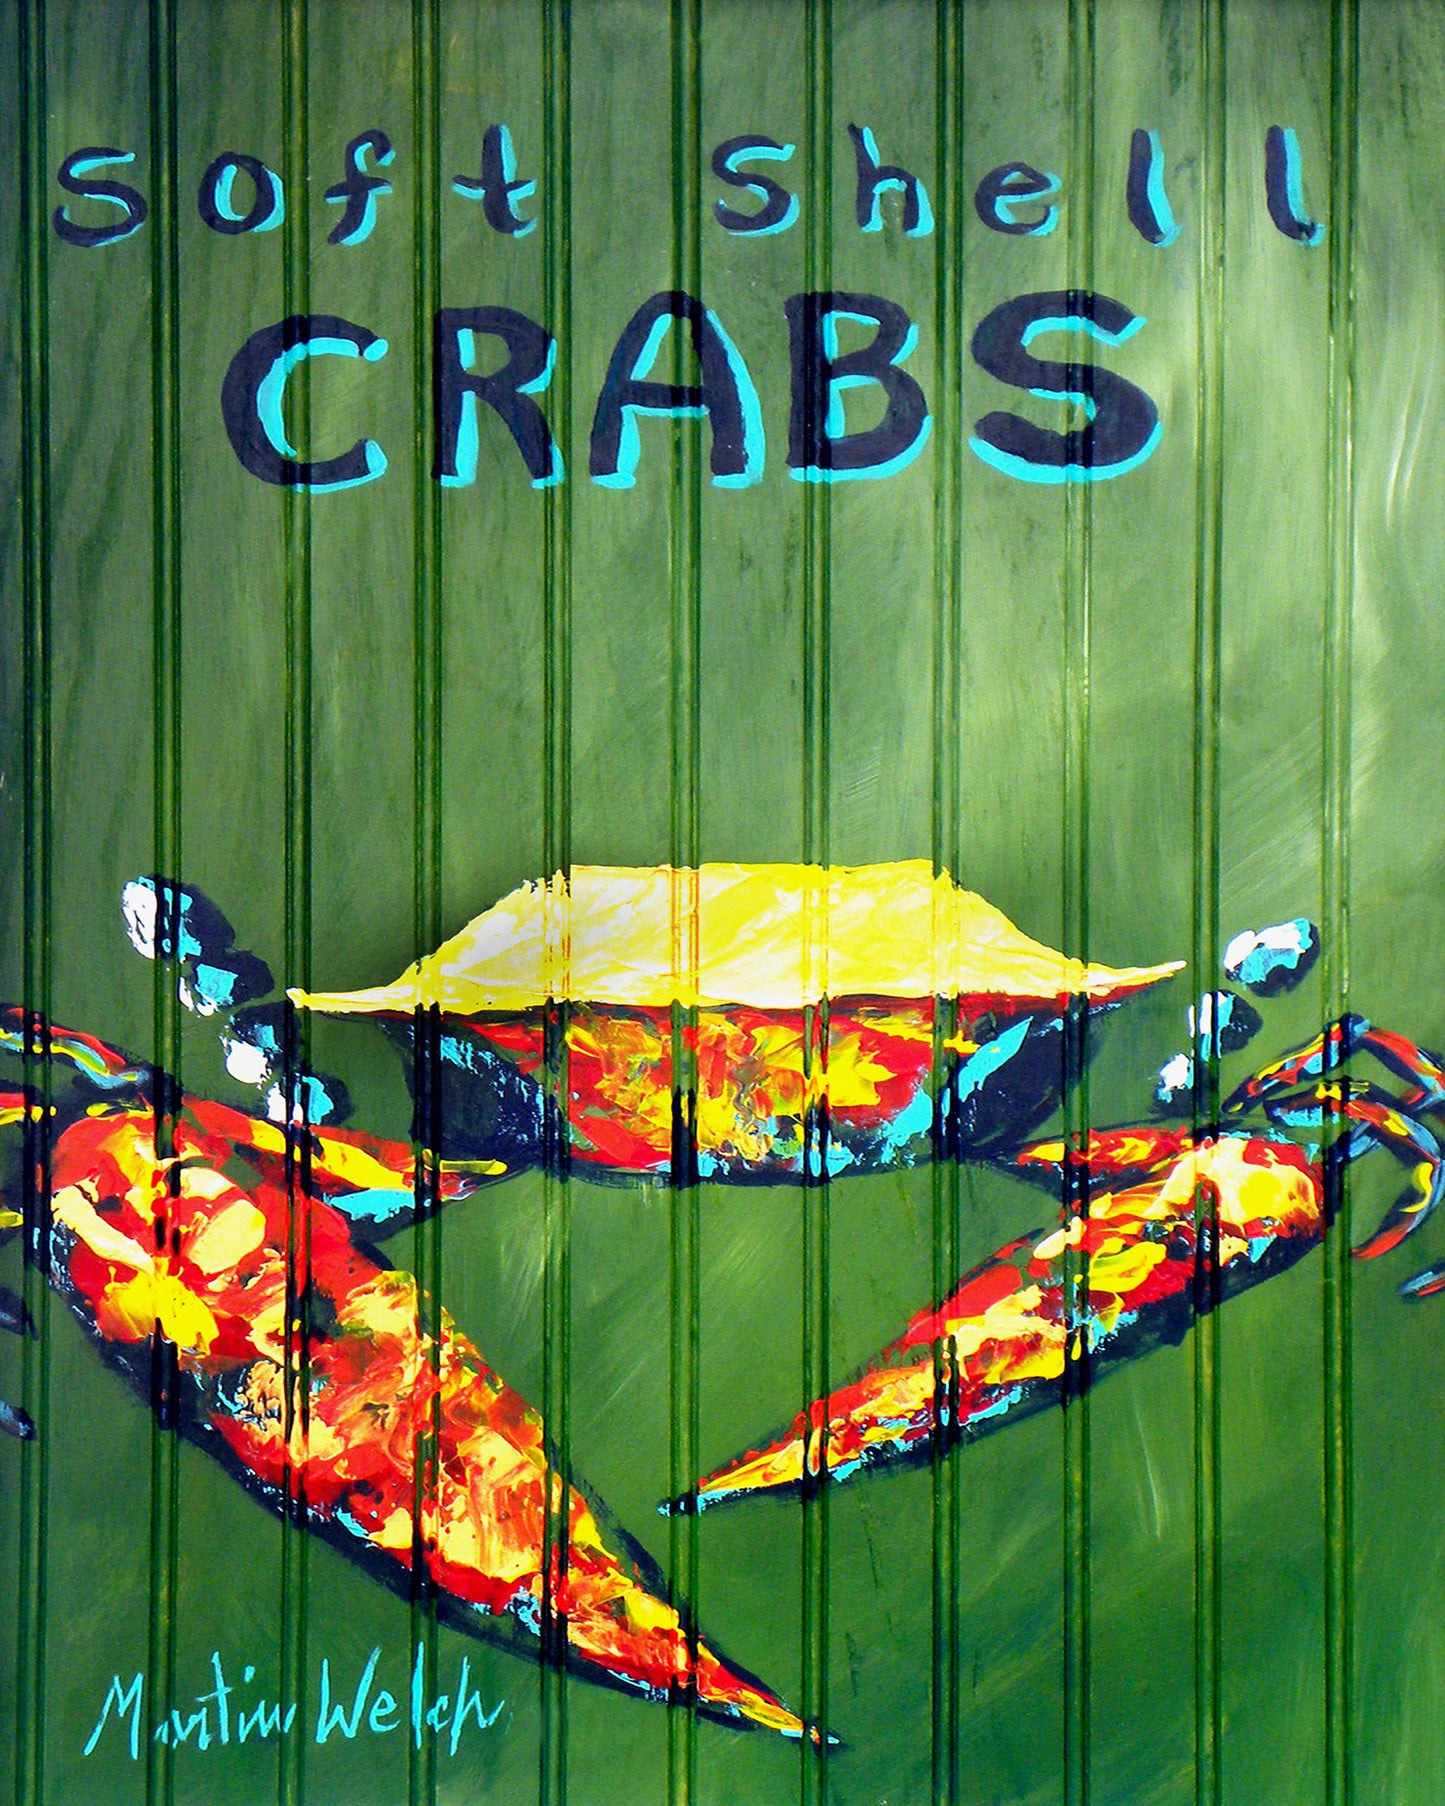 Soft Shell Crabs - Crabs - 11"x14" Print